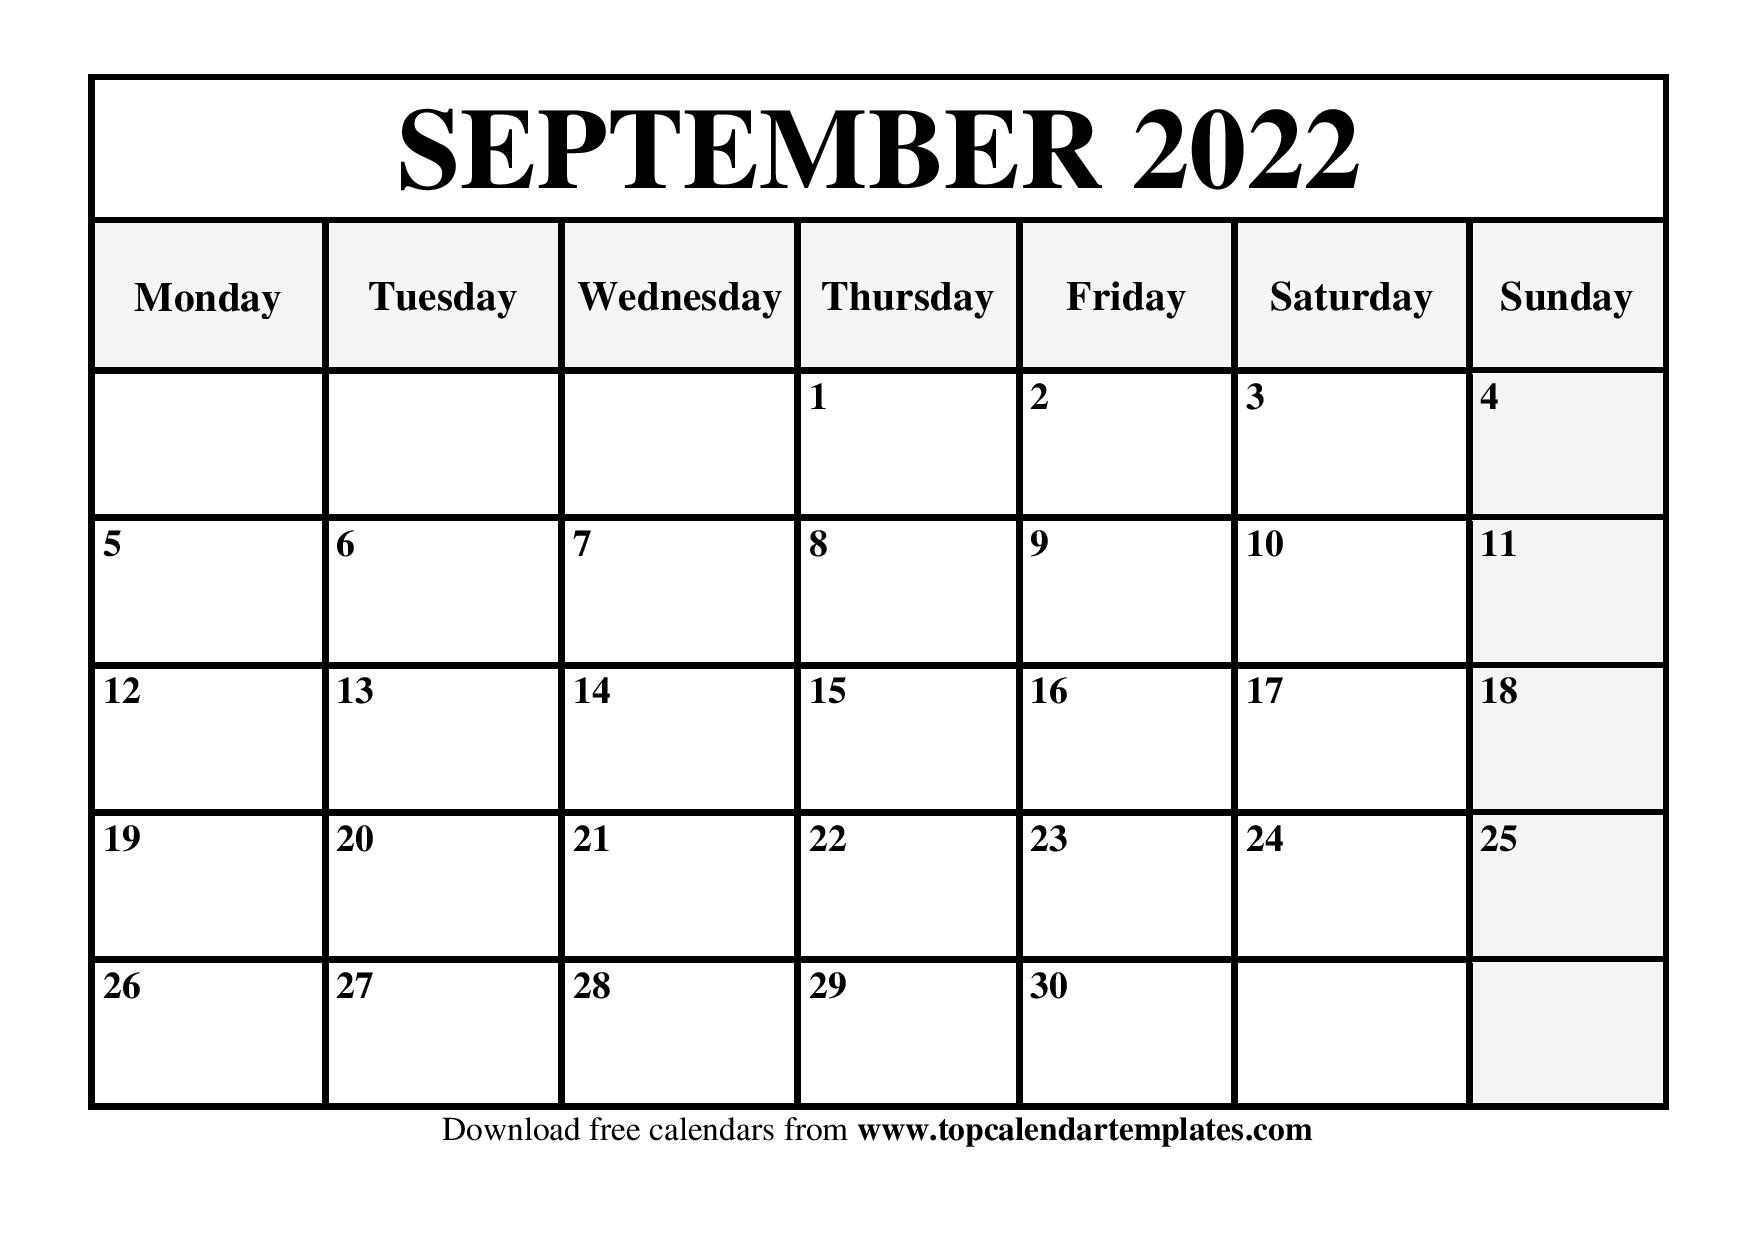 Free Printable Calendar Sept 2022 Printable Calendar September 2022 Templates - Pdf, Word, Excel